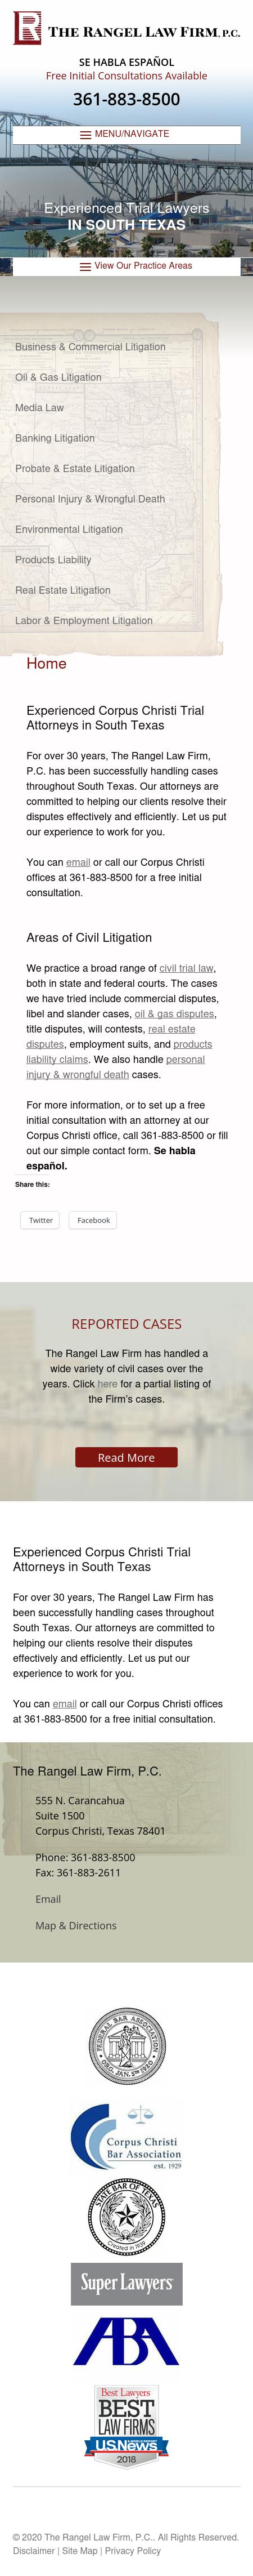 The Rangel Law Firm, P.C. - Corpus Christi TX Lawyers